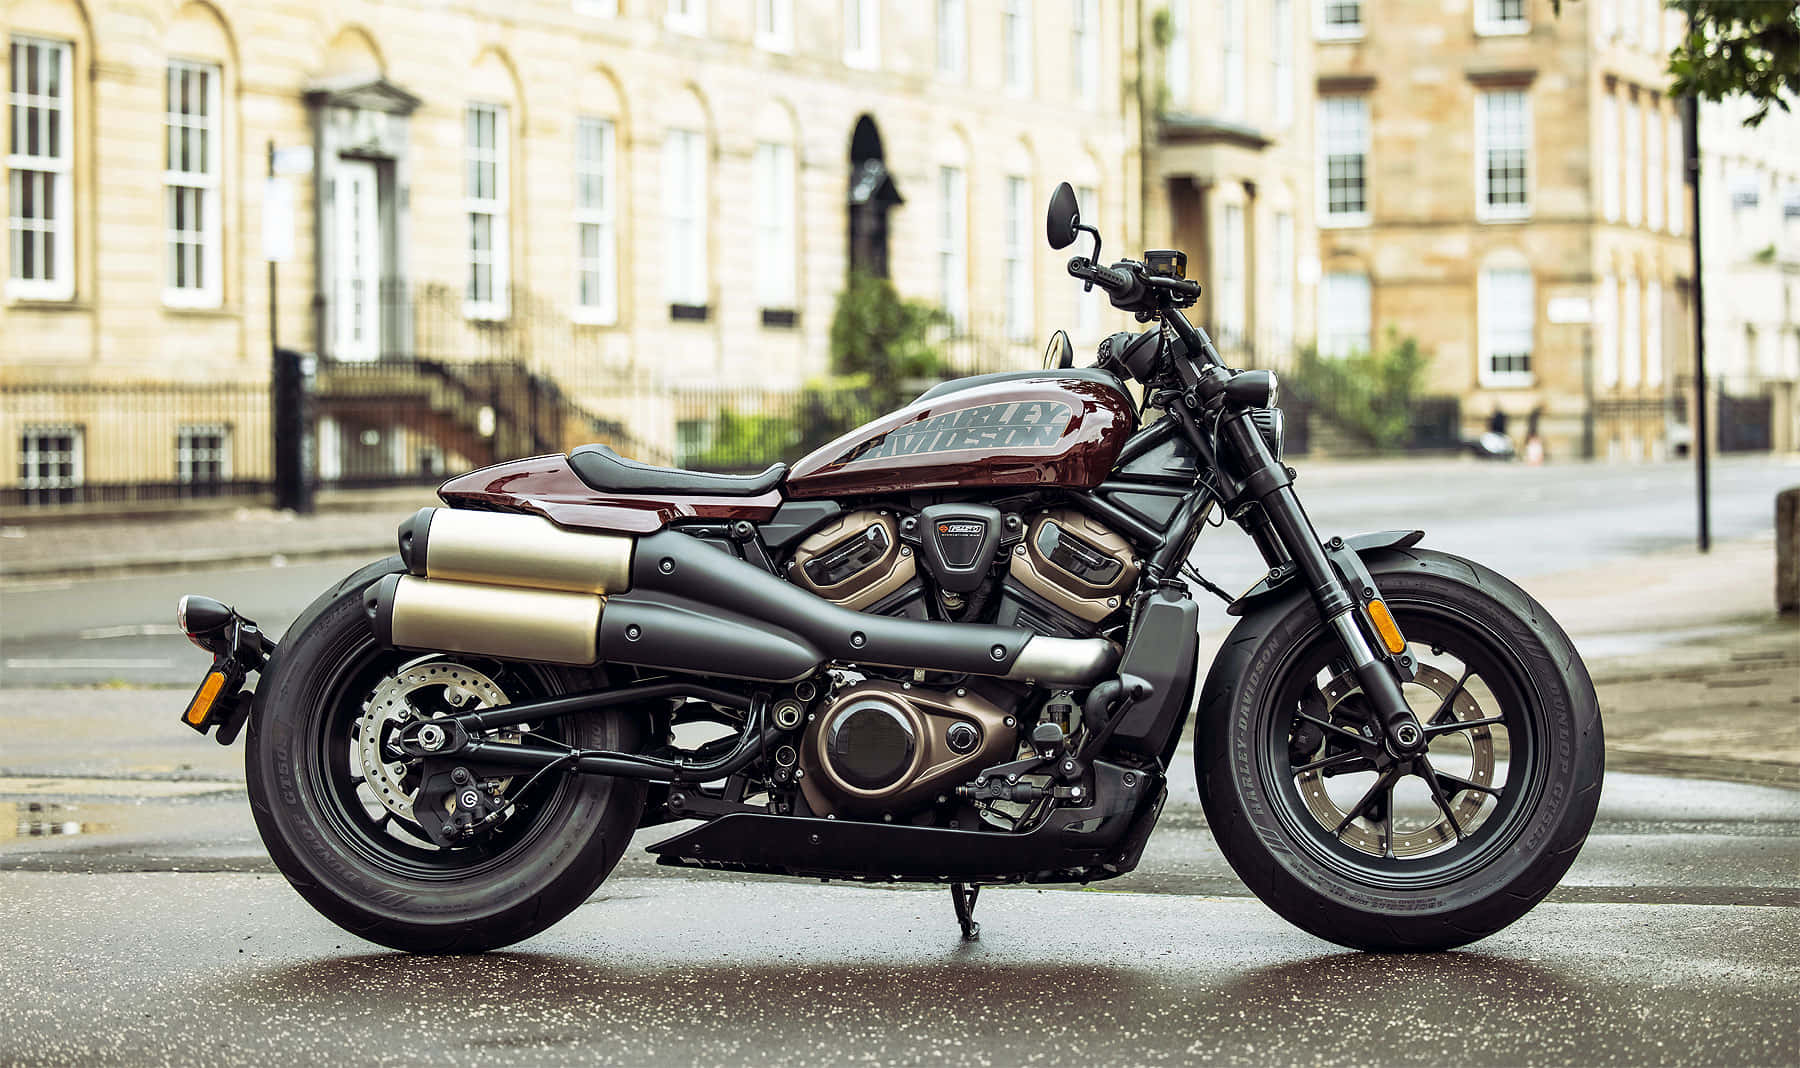 An American Icon: Harley Davidson